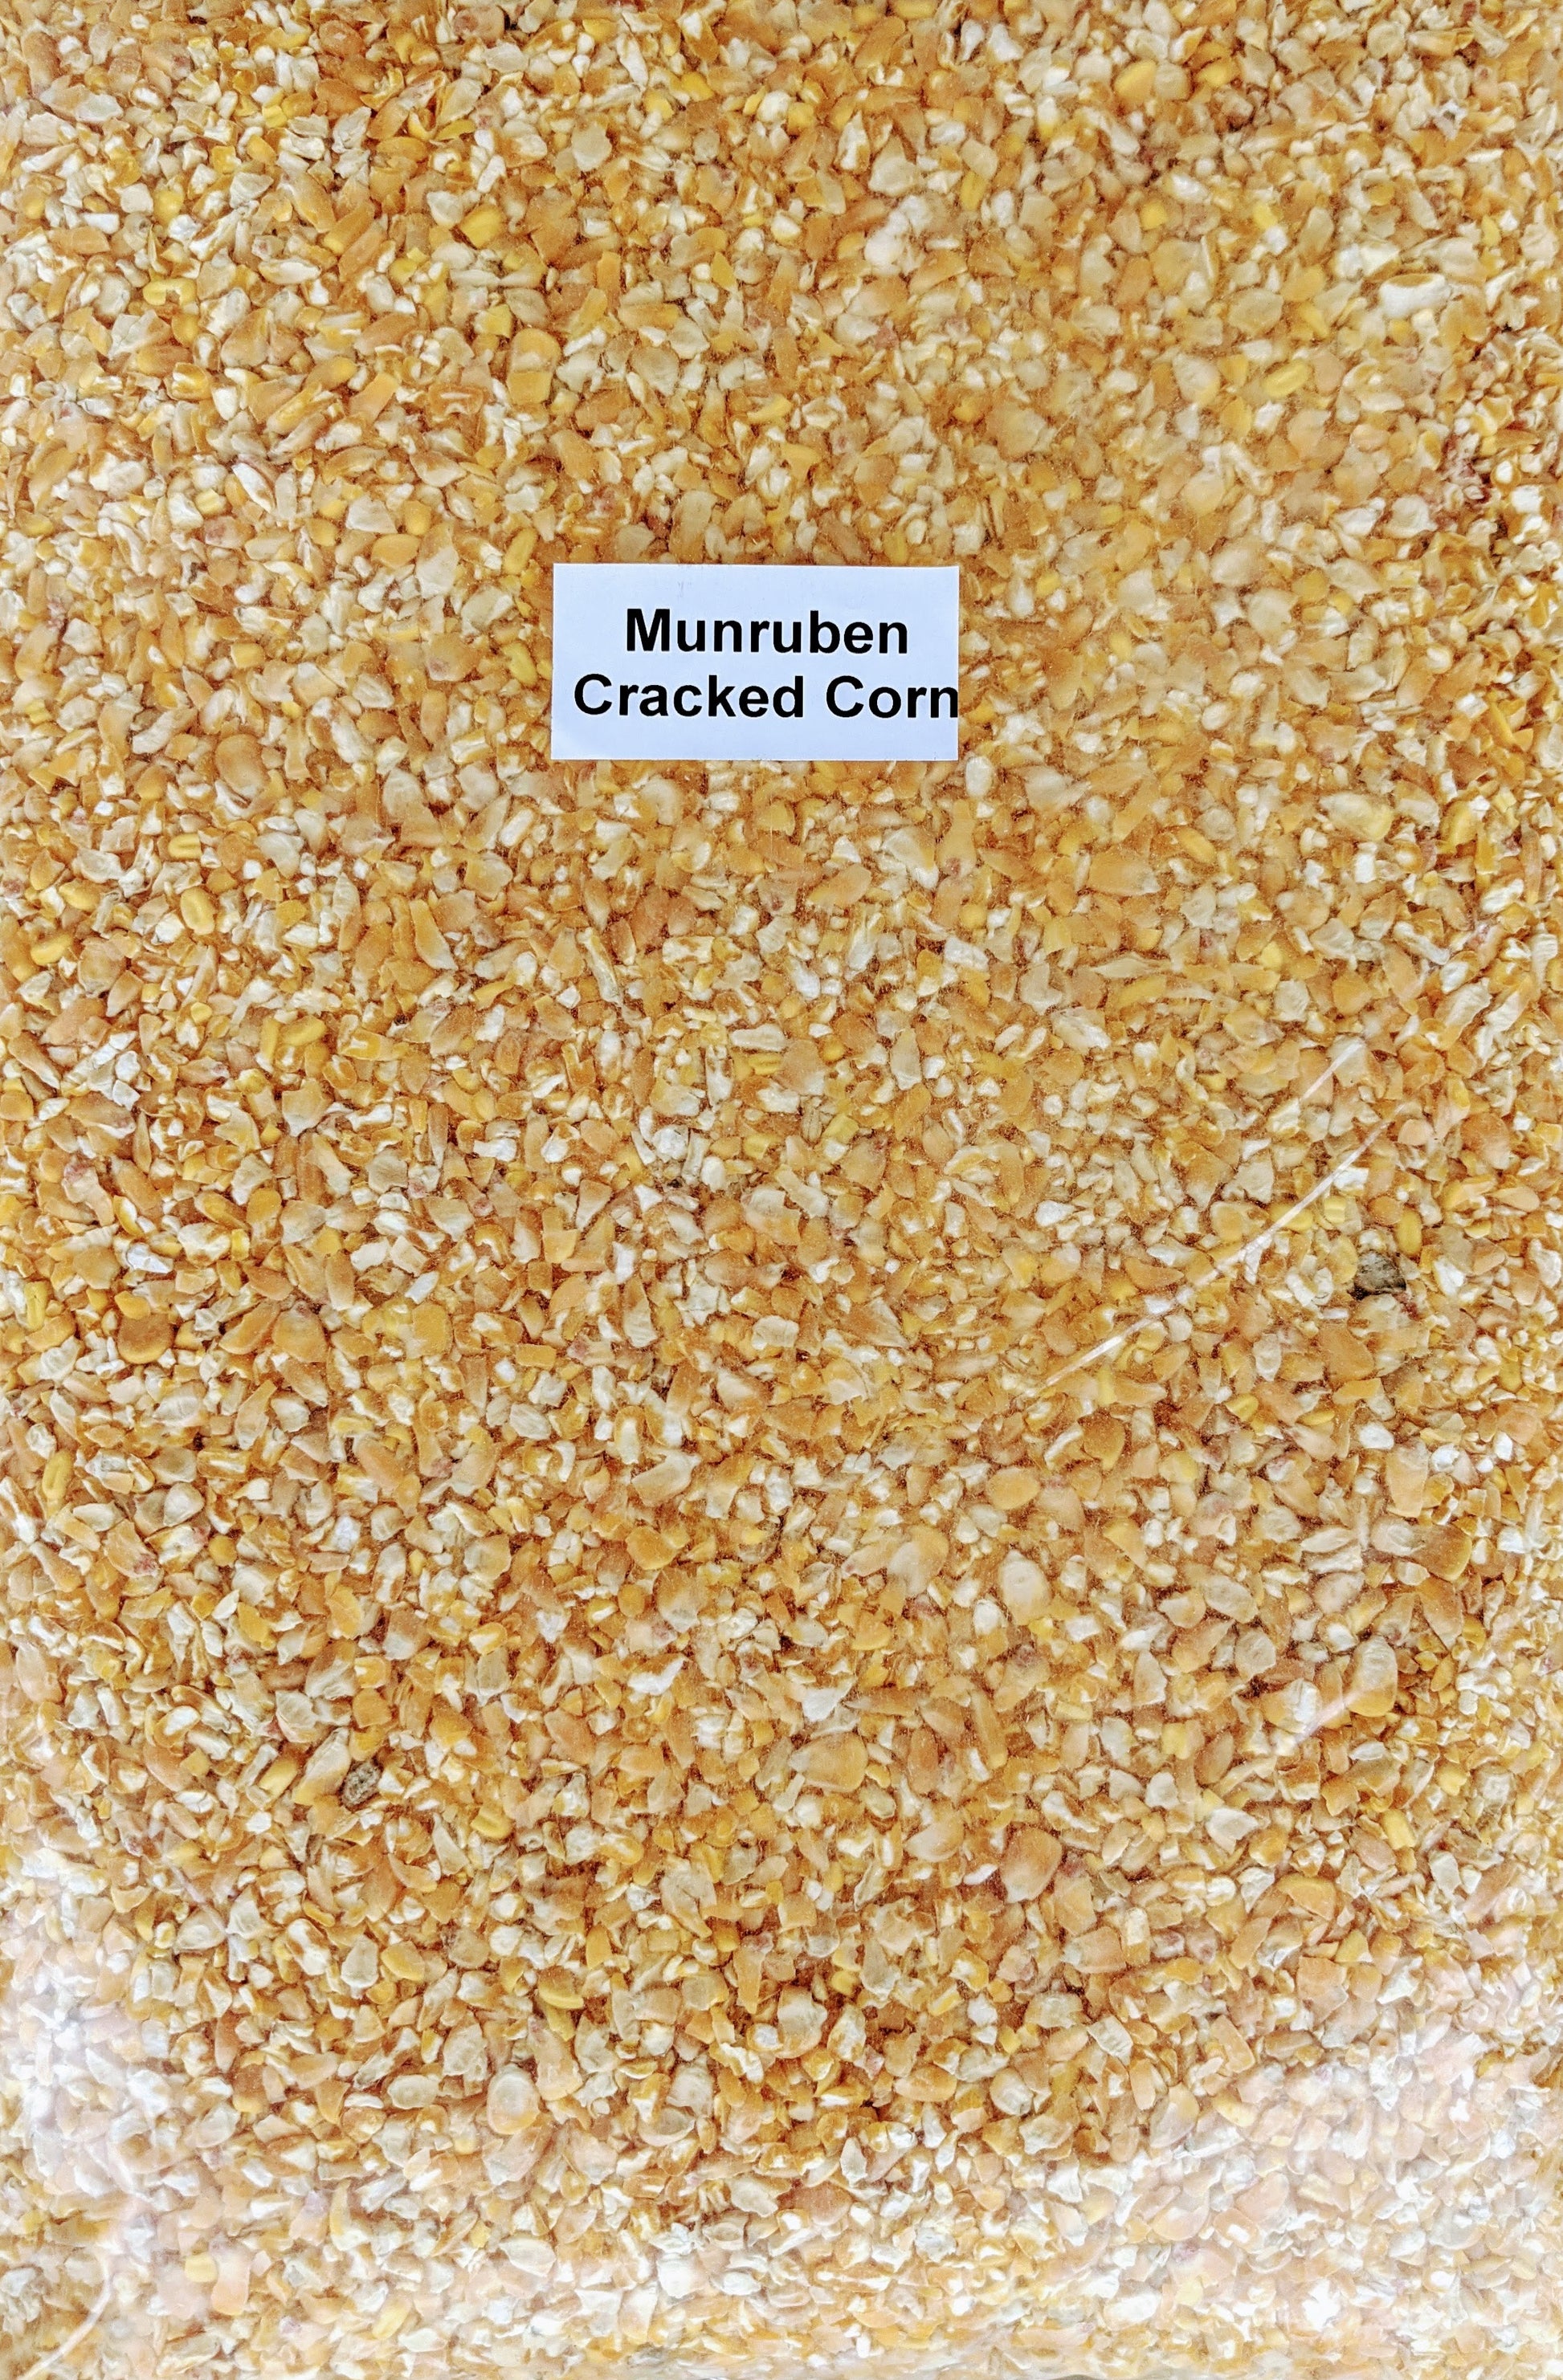 Munruben Cracked Corn 4kg at Buckhams General Produce